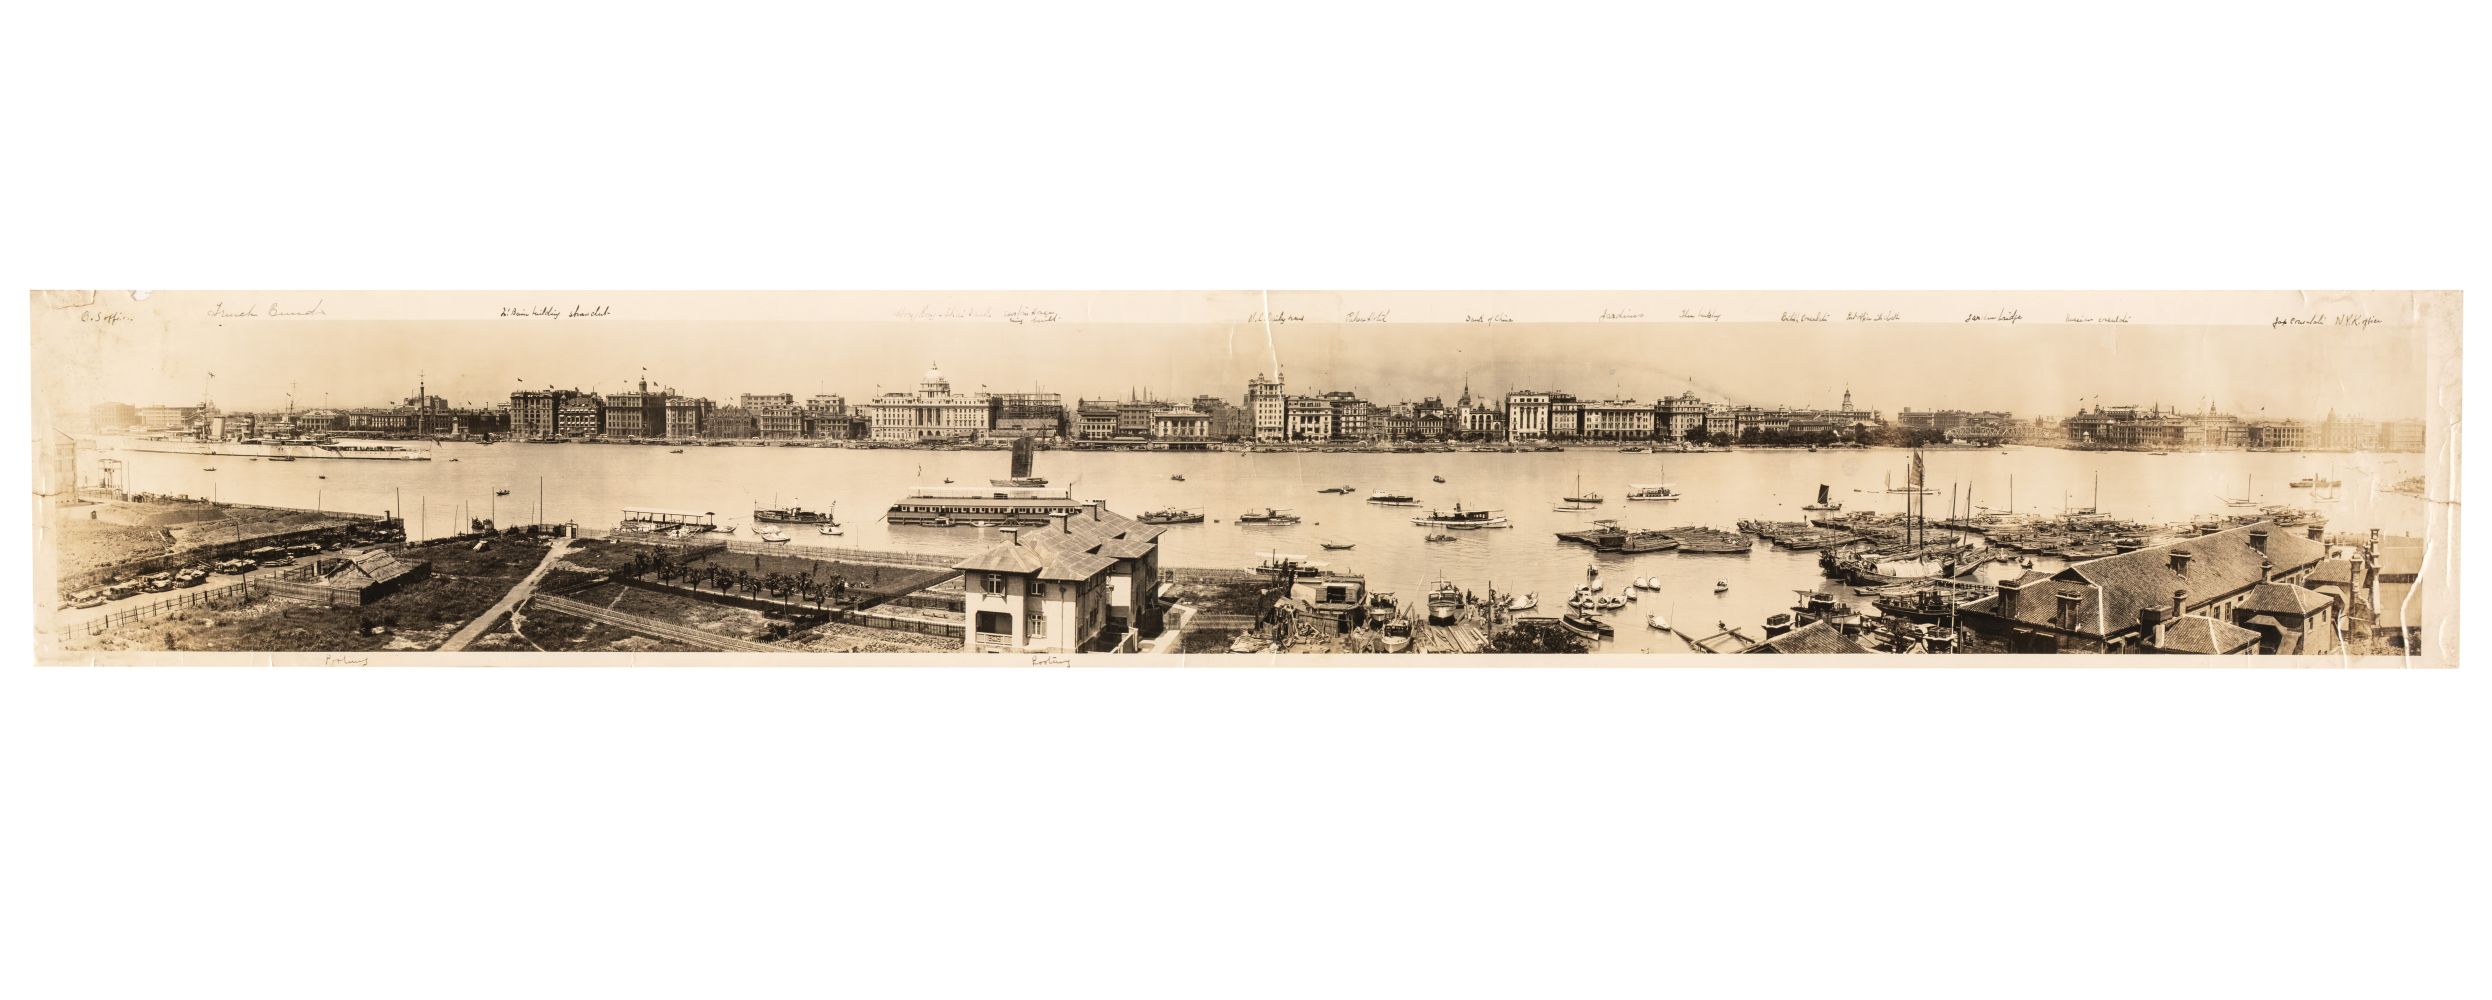 China. Panorama of Shanghai, [Afong Studio], 1926/7, gelatin silver print panorama